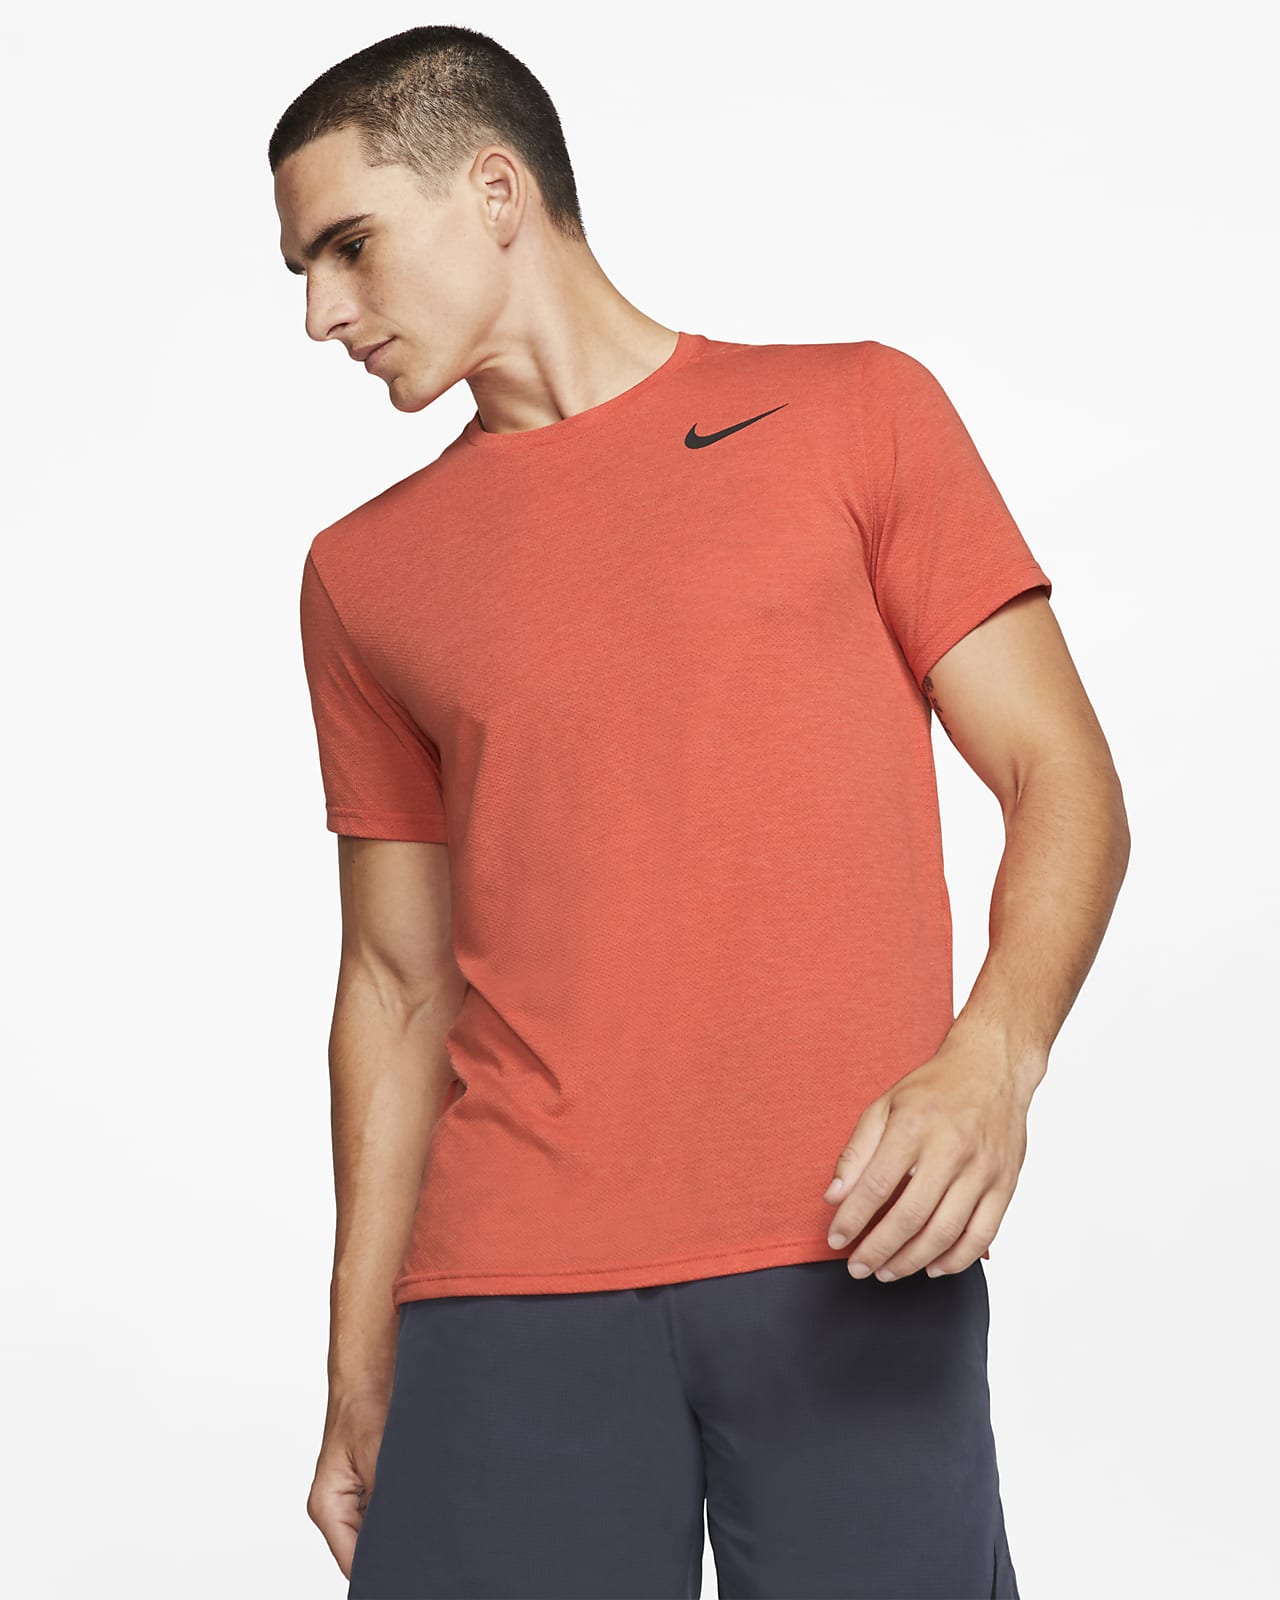 Nike Men's Short-Sleeve Training Top. IL